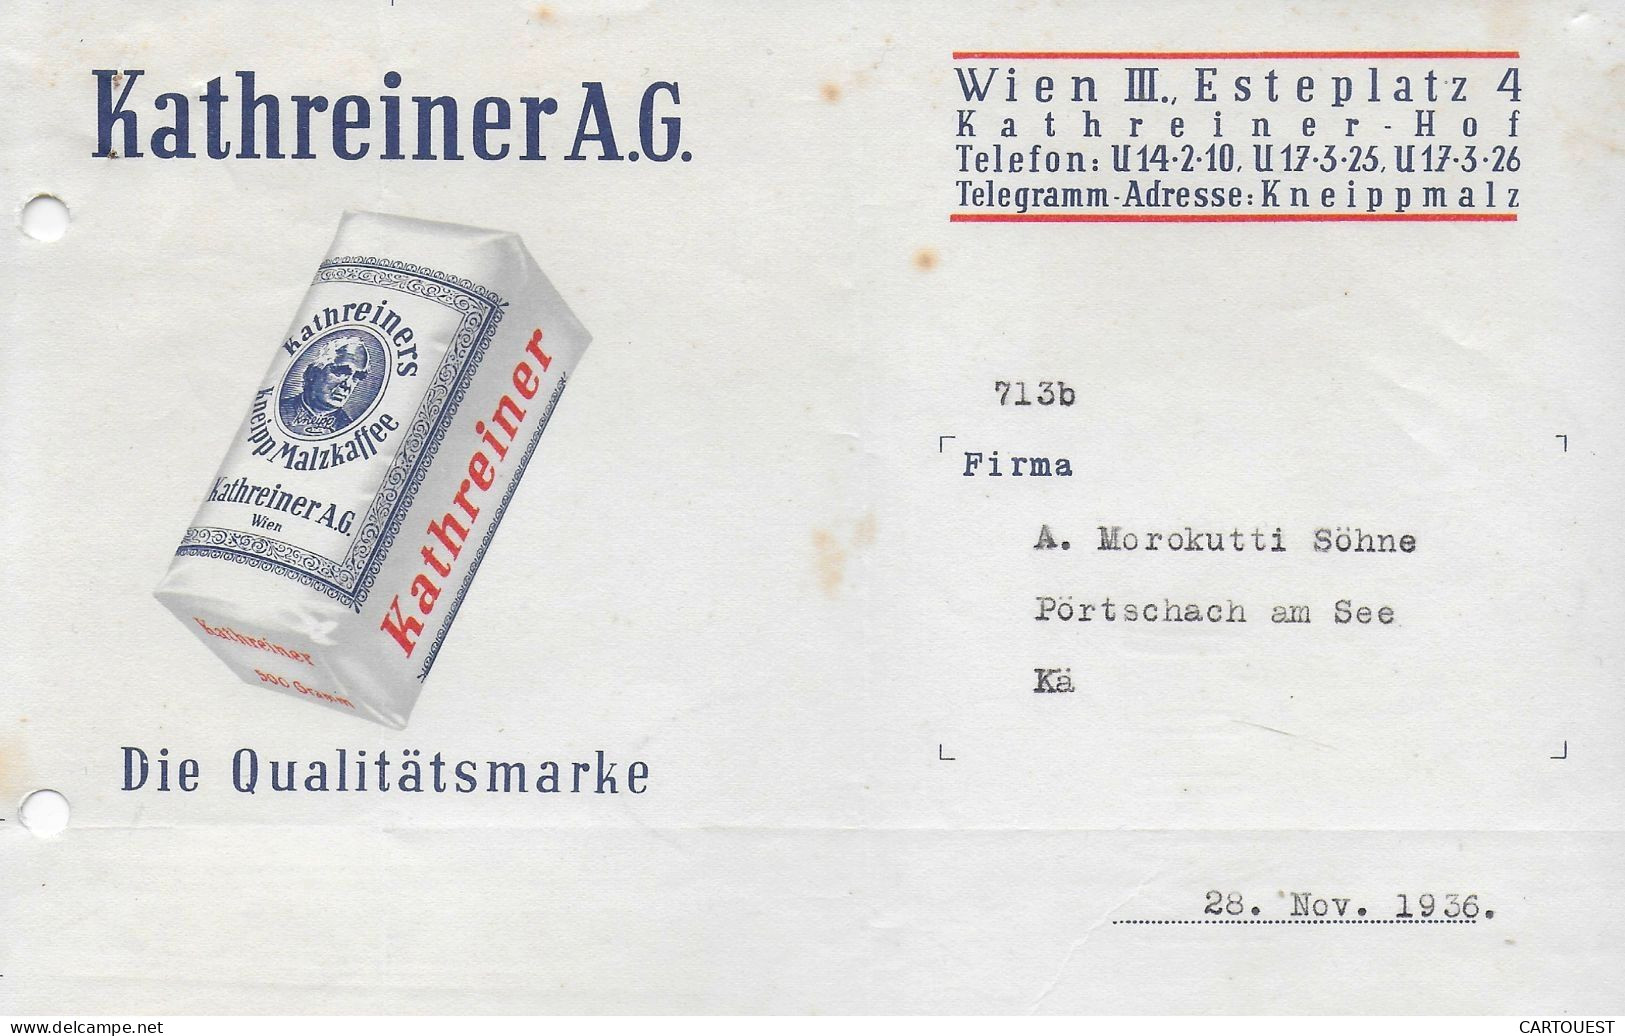 WIEN,1936 KATHREINER A.G. Wien III Esteplatz 4 KNEIPP MALZKAFFE - Oostenrijk